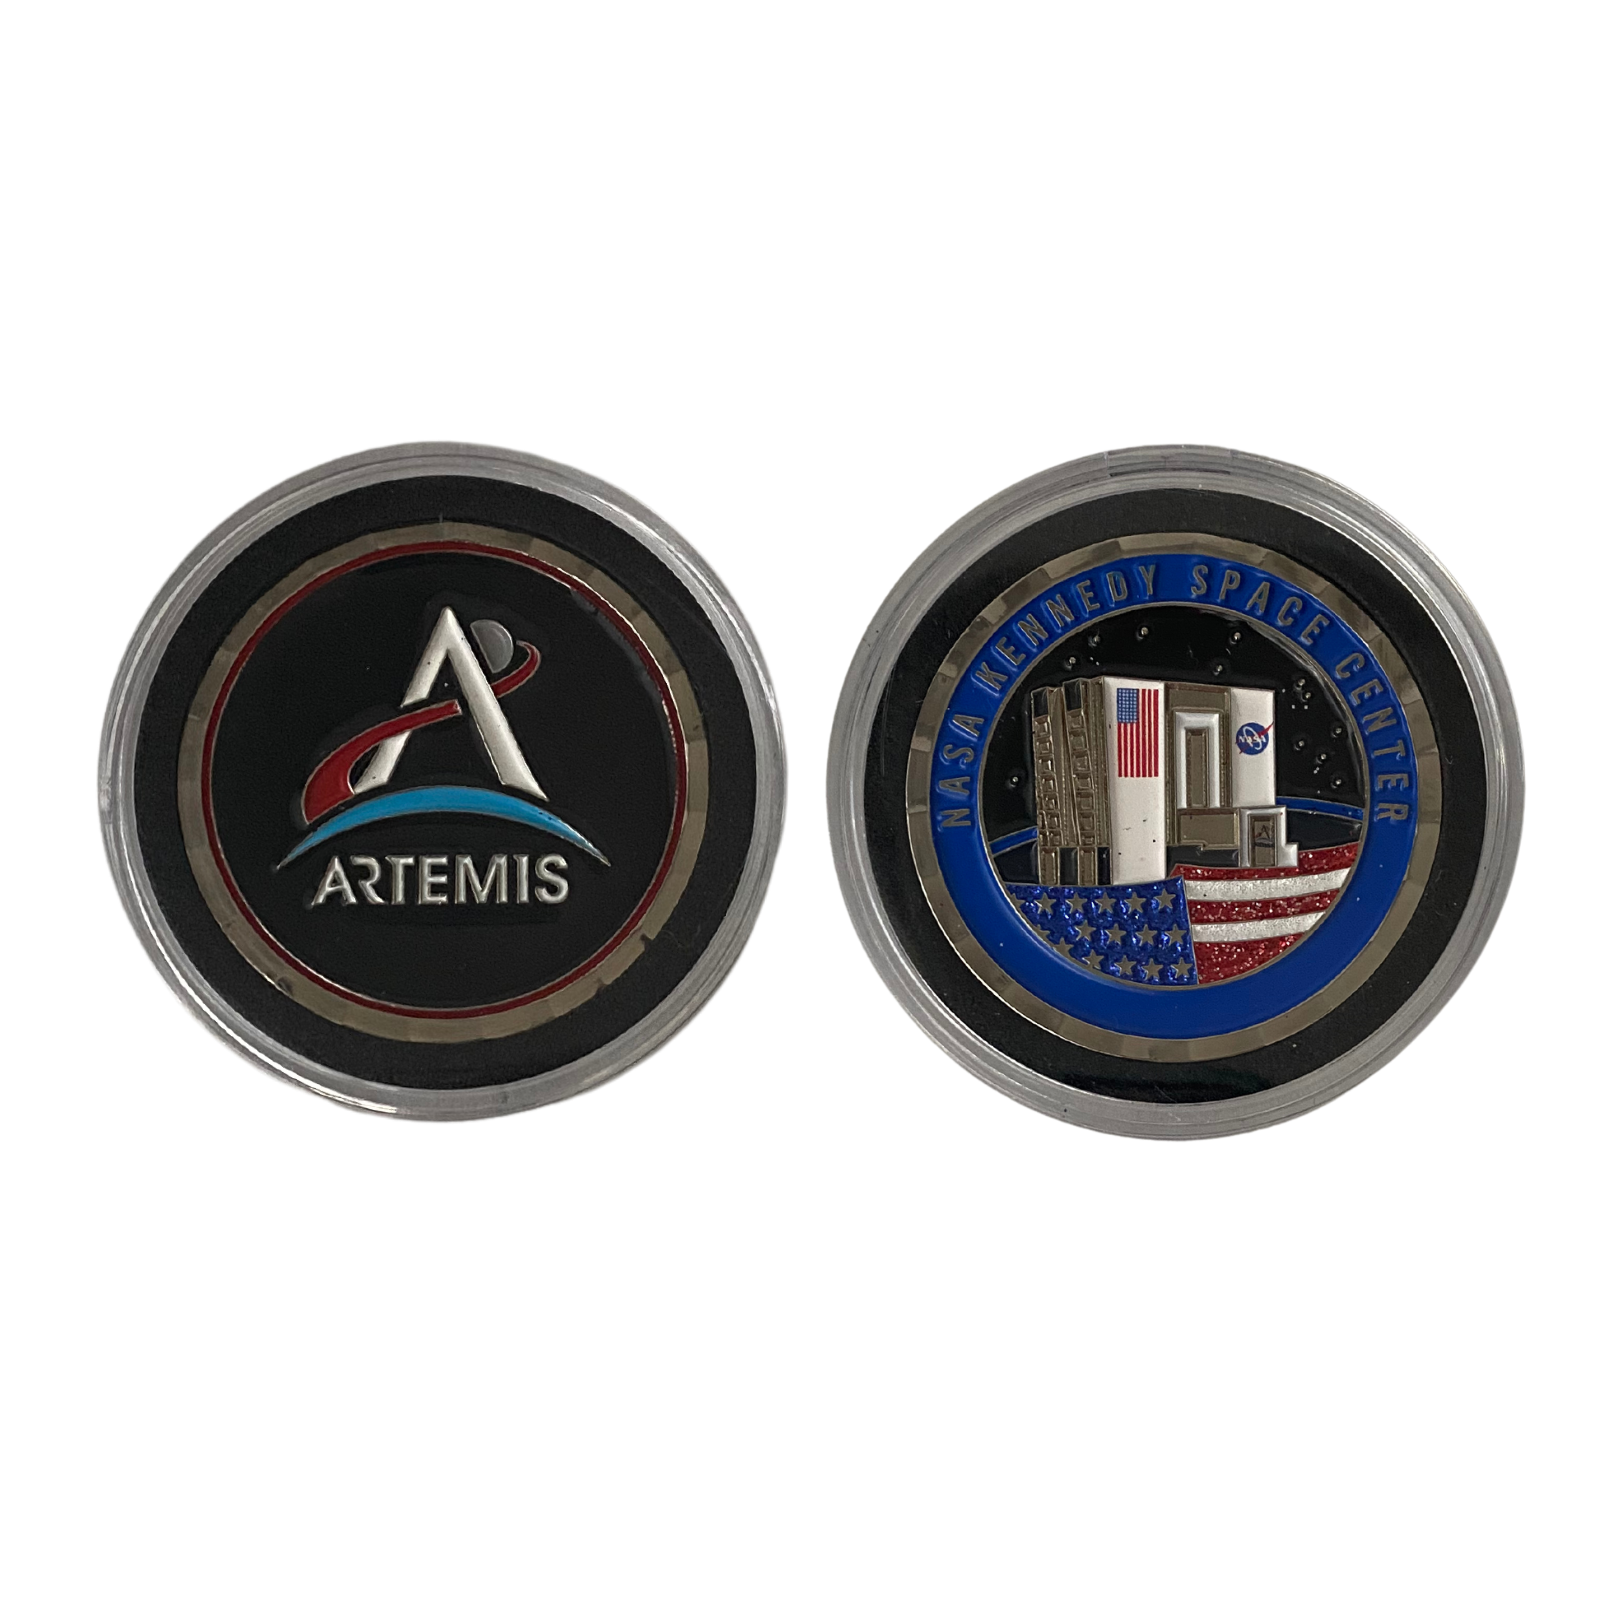 NASA Artemis Program Coin - 3 Styles